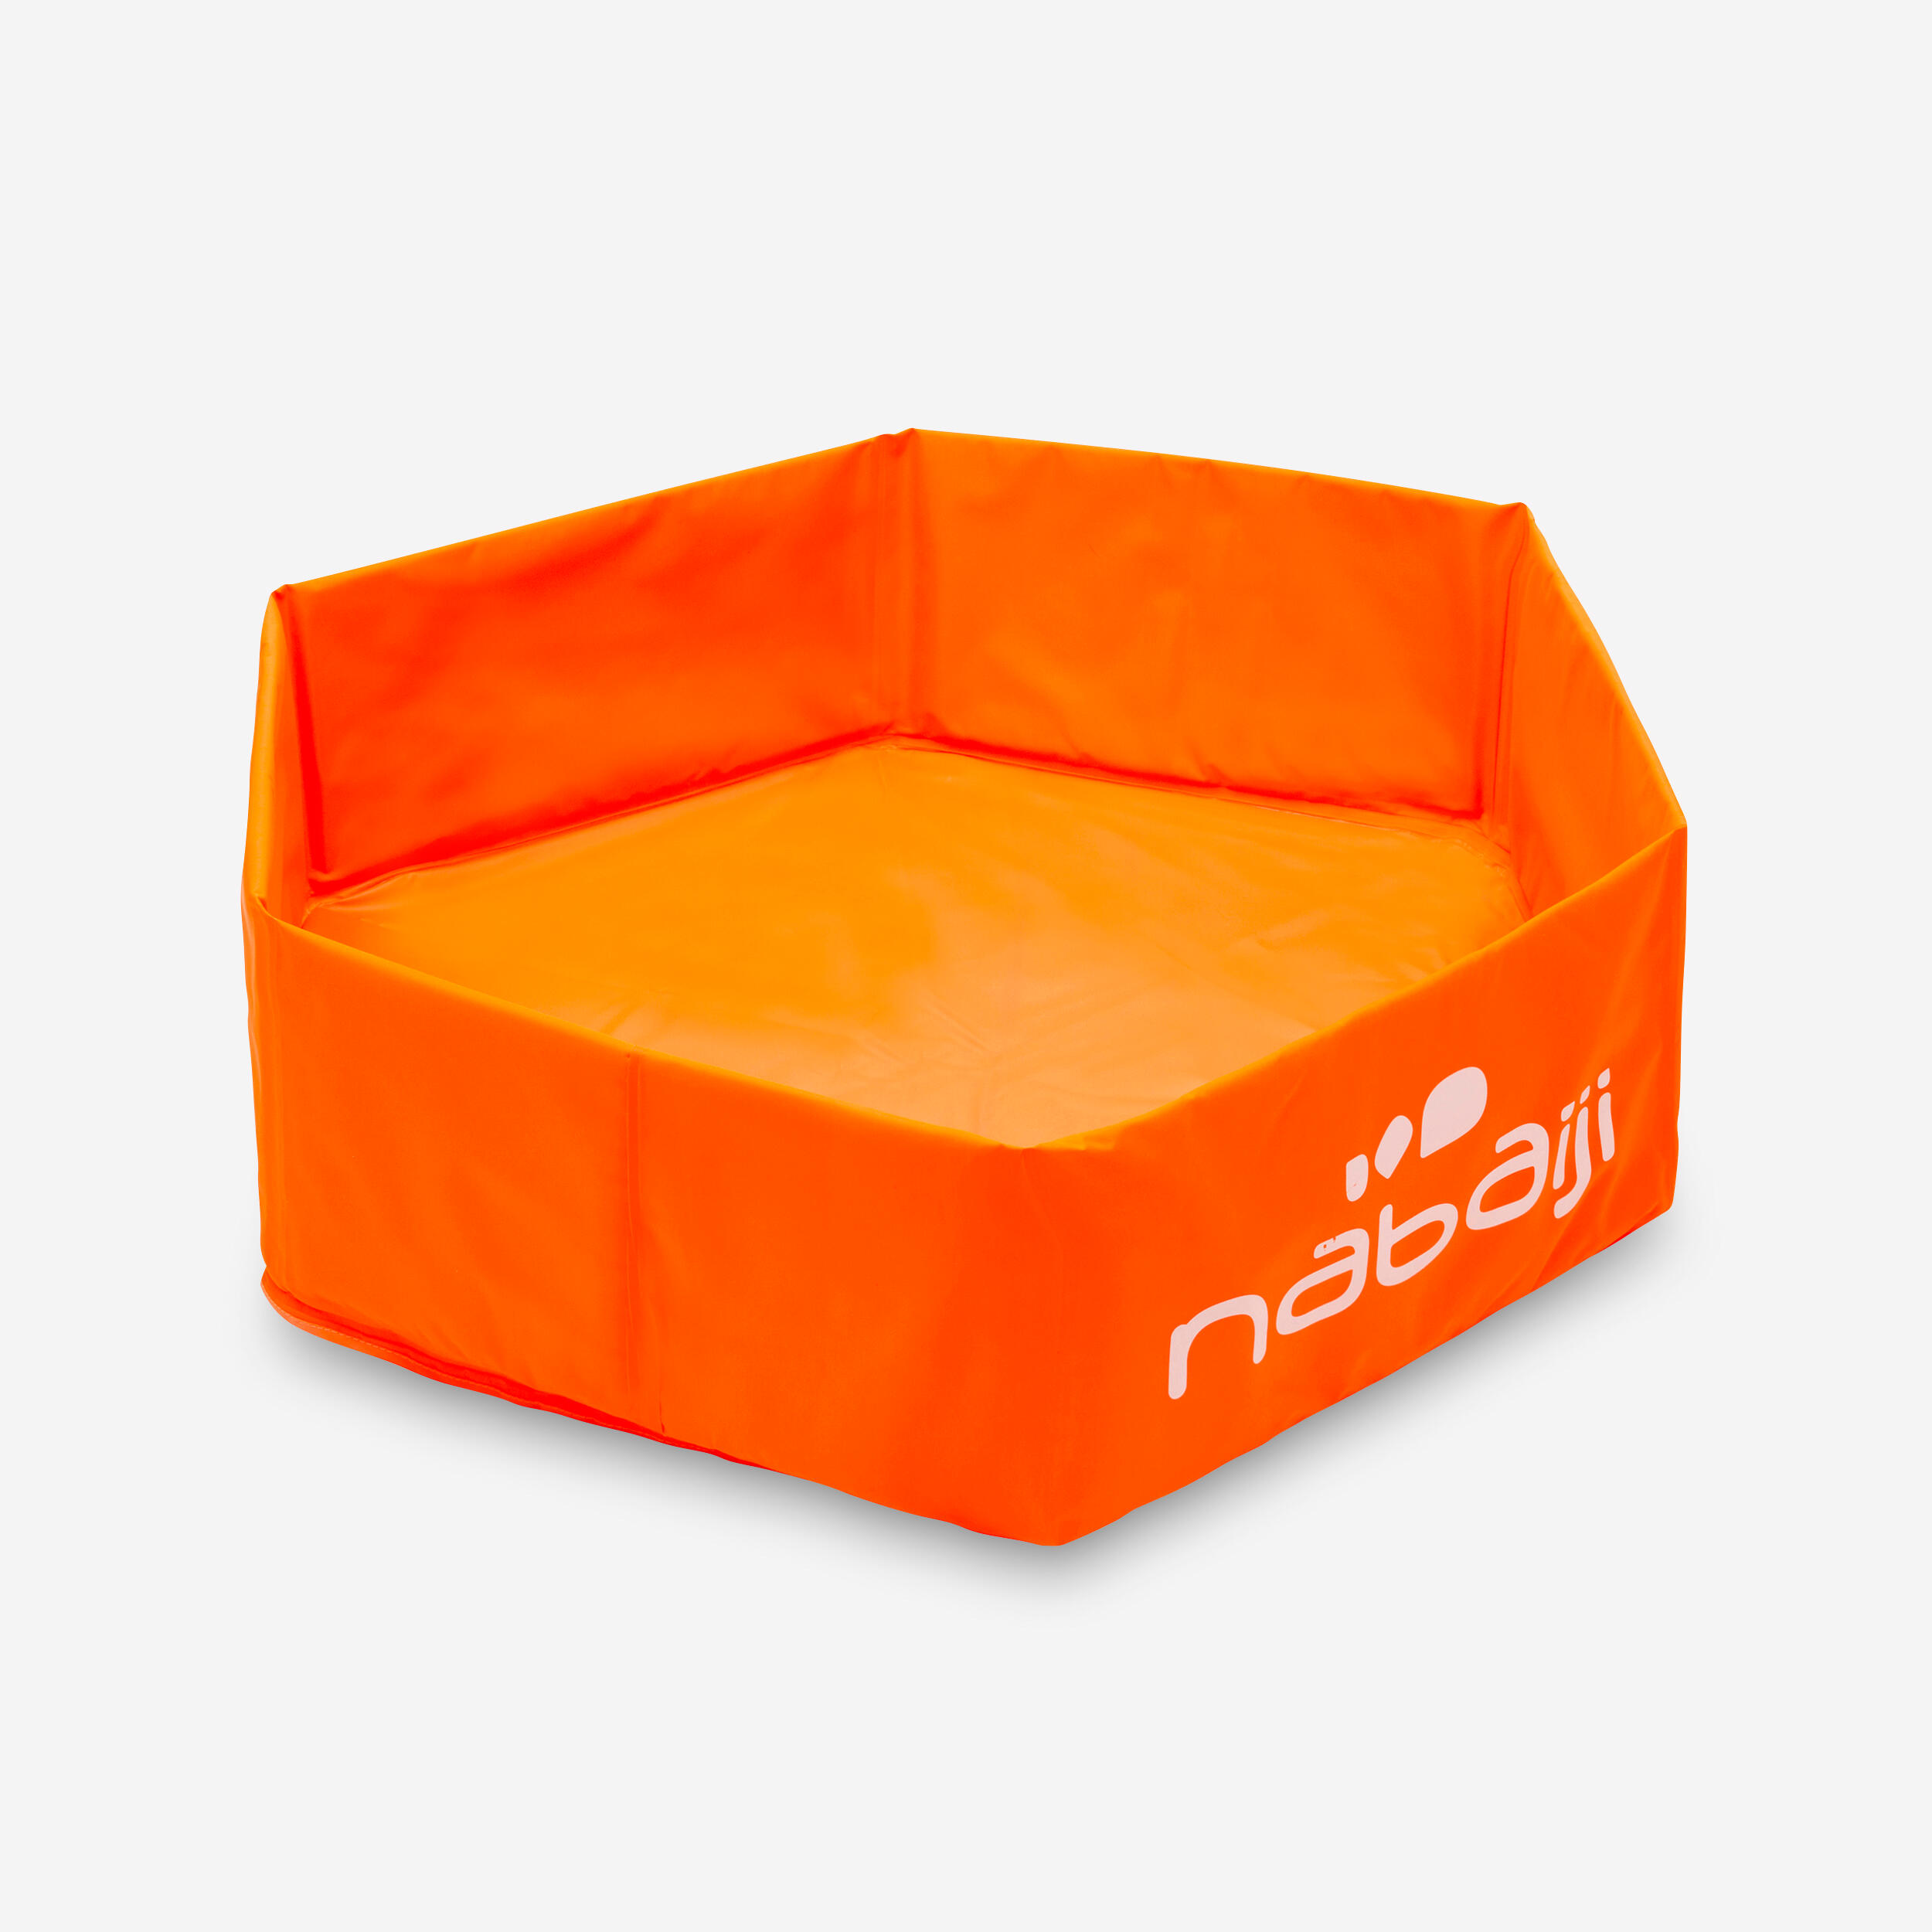 NABAIJI TIDIPOOL BASIC 65 m diameter foam paddling pool for infants - Orange